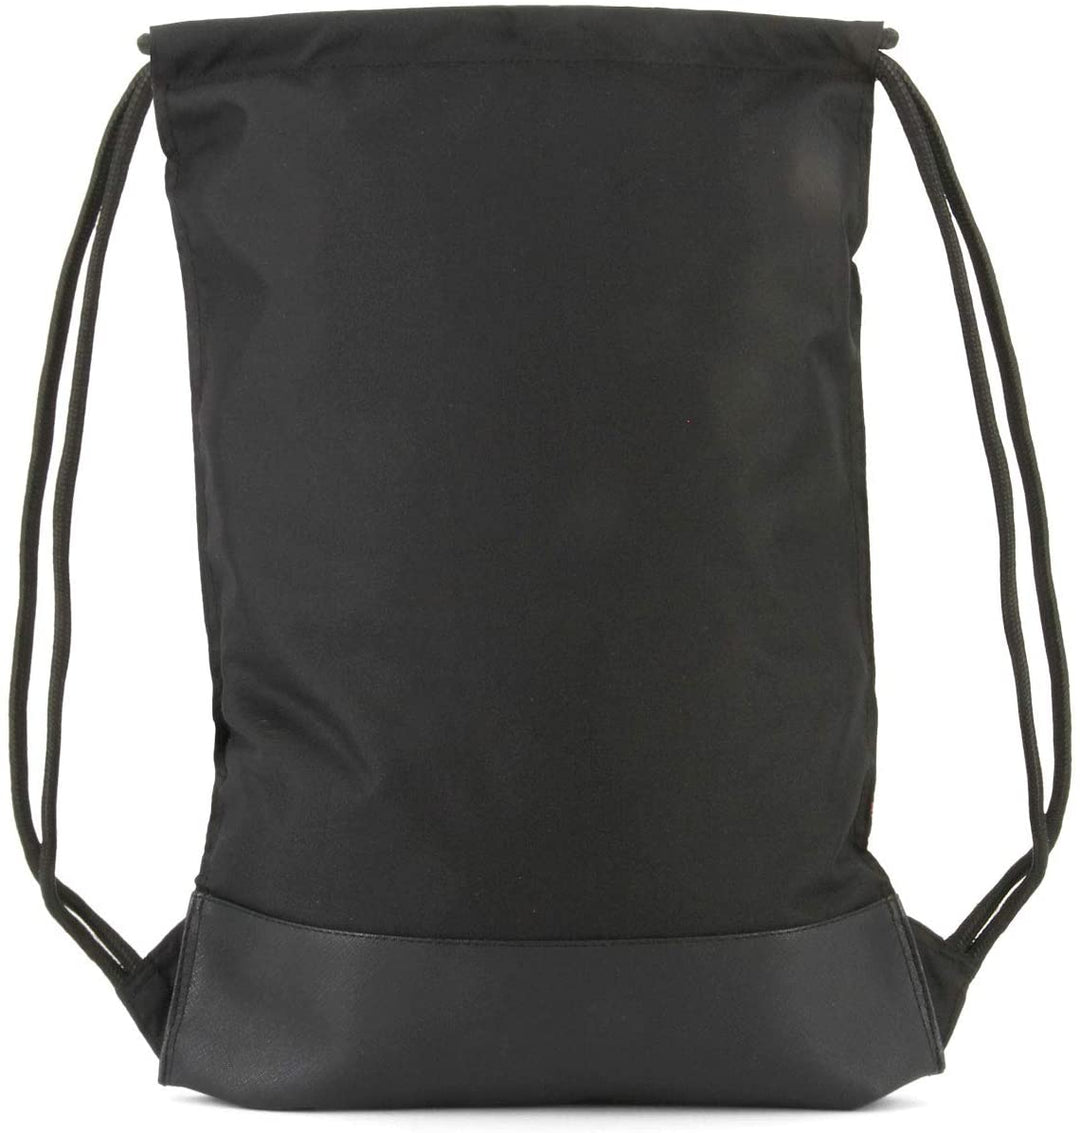 PRODG Jungle-Storm Drawstring Bag, 48 cm, Green